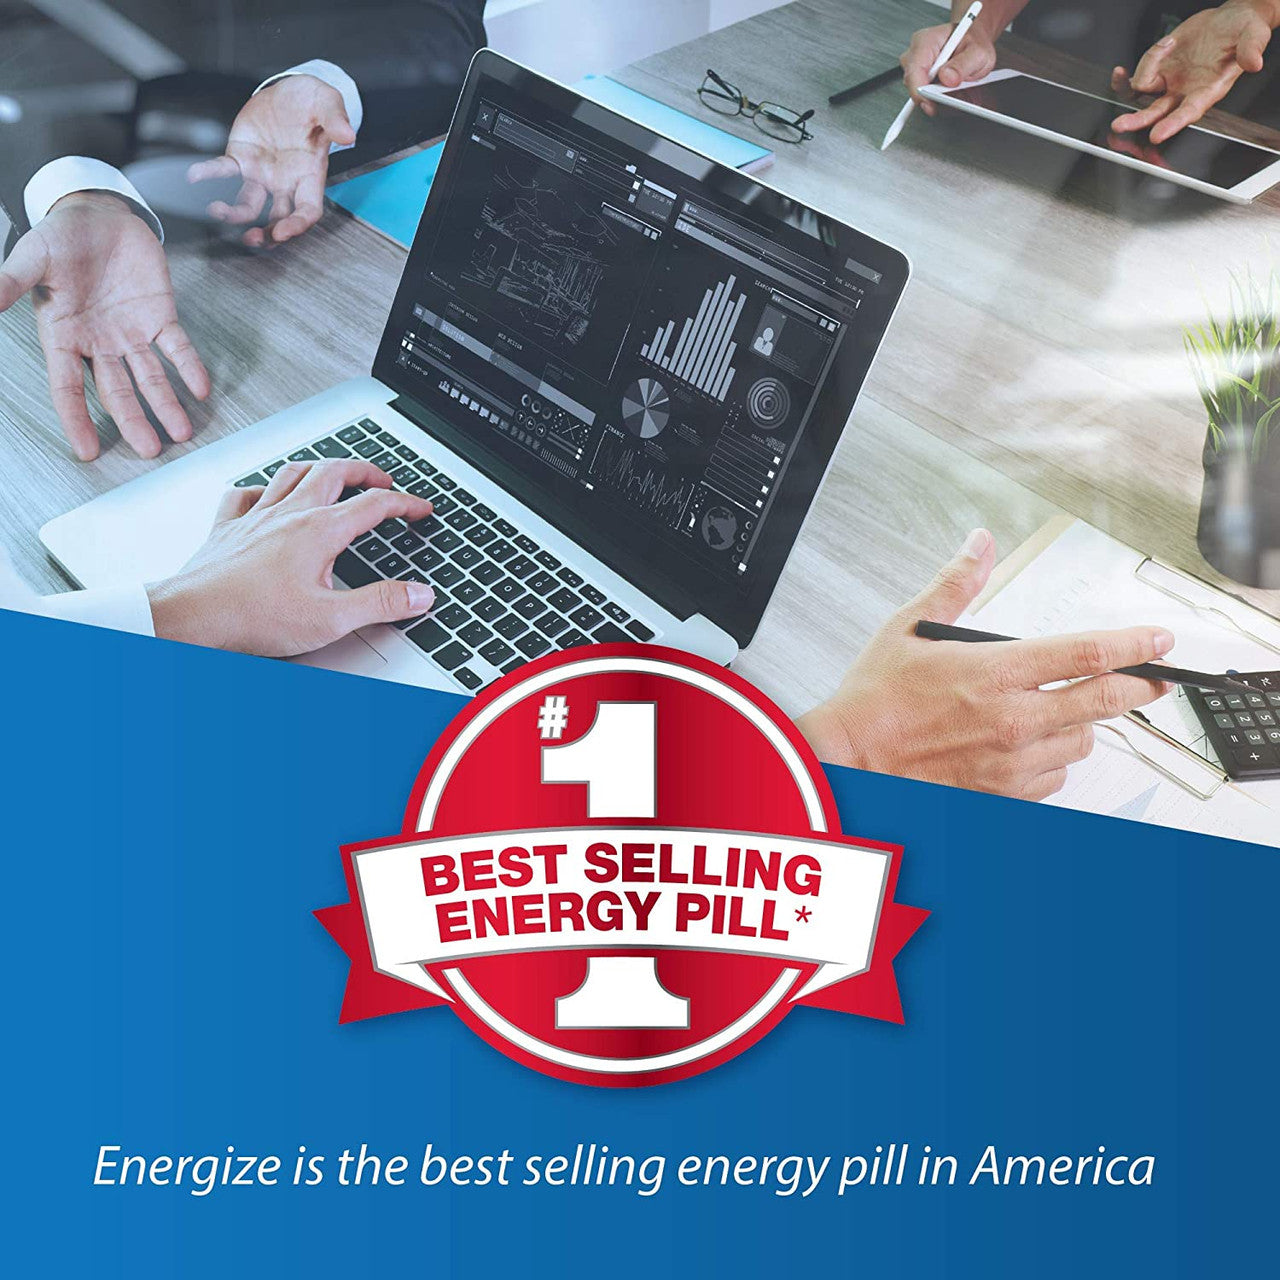 ISatori Energize number 1 brand in america